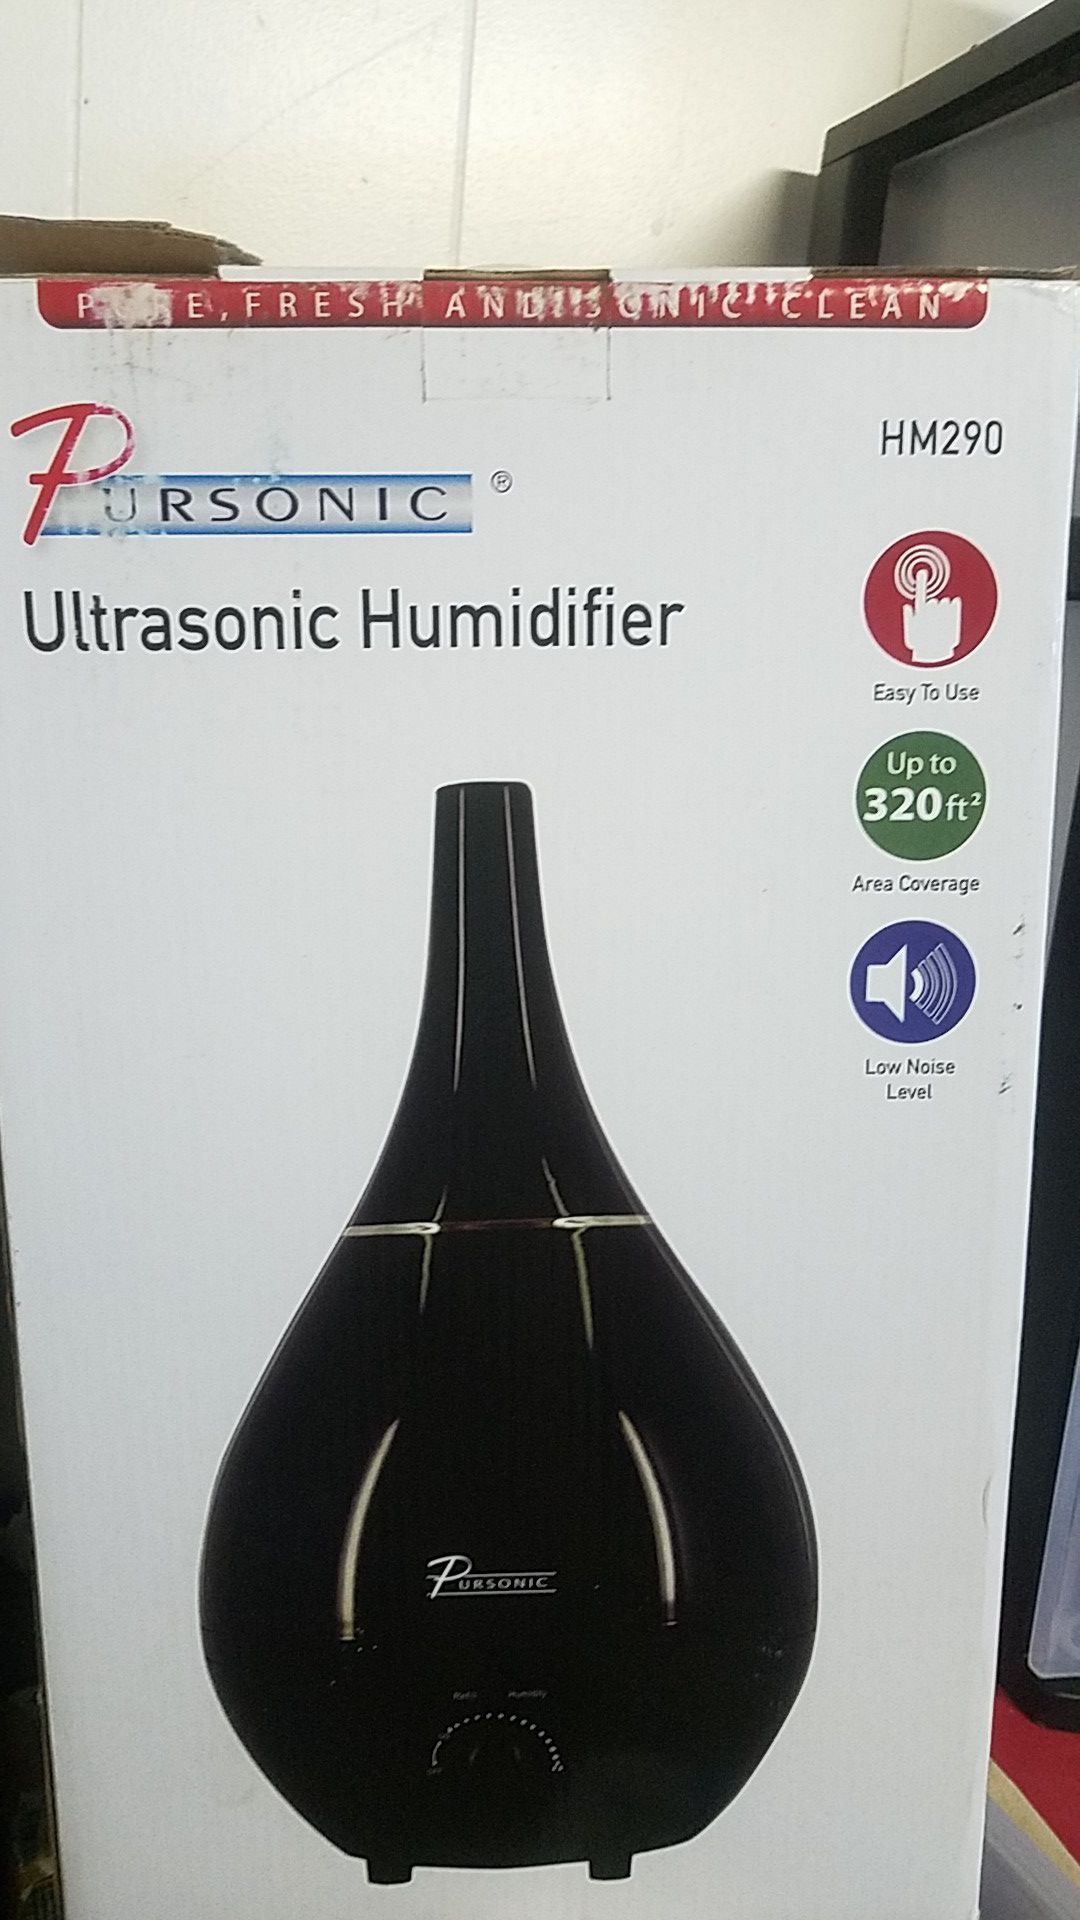 Pursonic humidifier